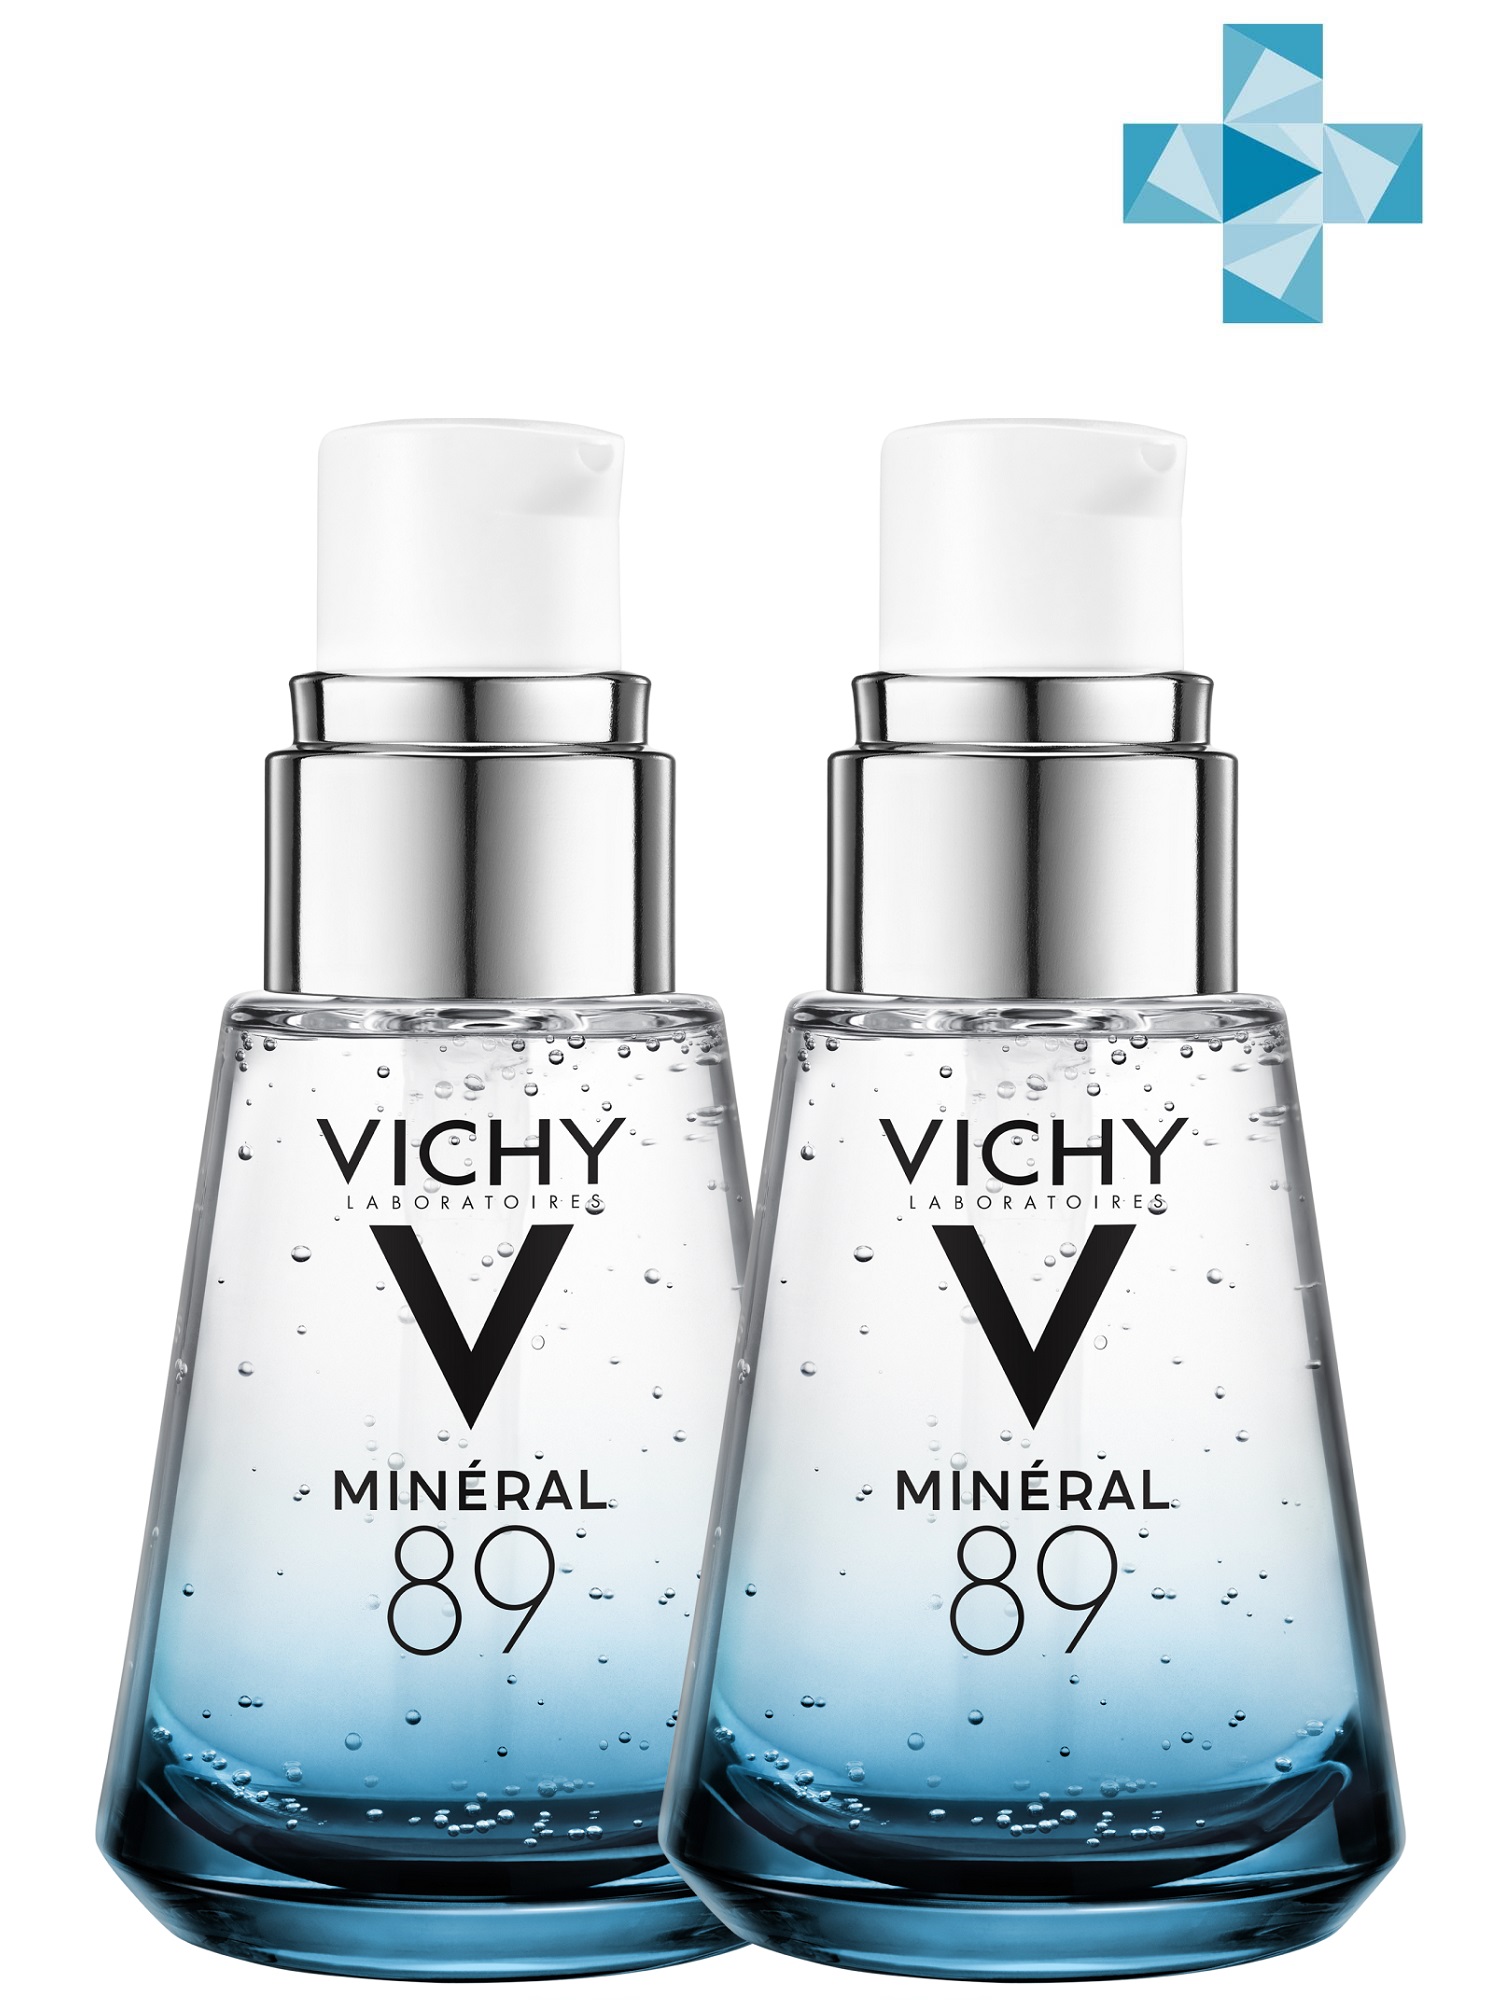 цена Vichy Комплект Гель-сыворотка для всех типов кожи Минерал 89, 2 х 30 мл (Vichy, Mineral 89)